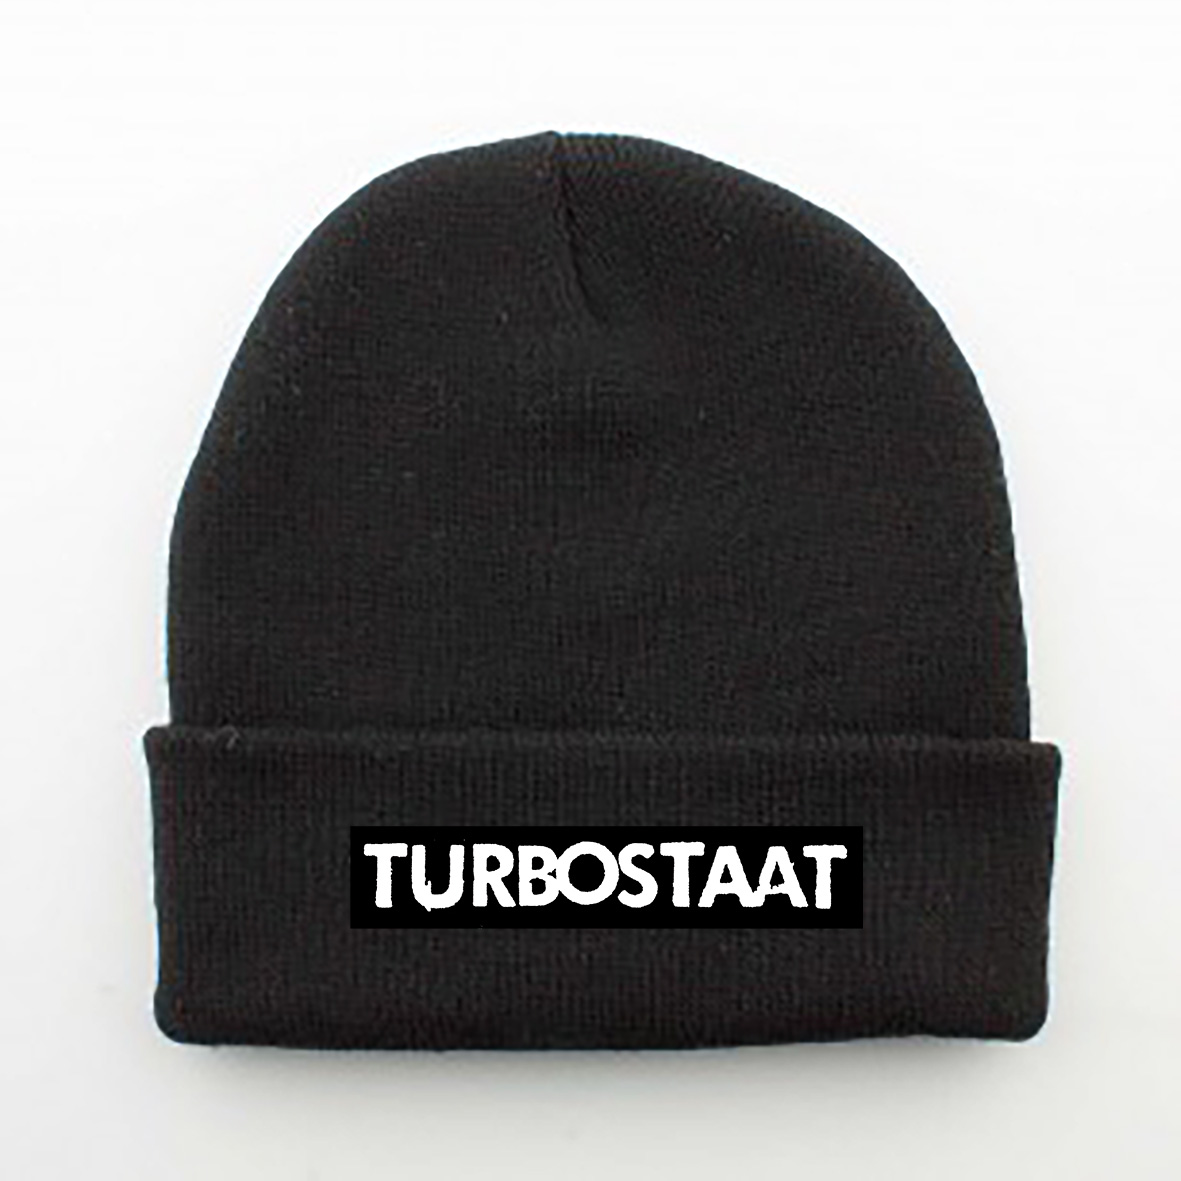 Turbostaat Mütze mit Turbostaat-Logo-Patch Beanie black